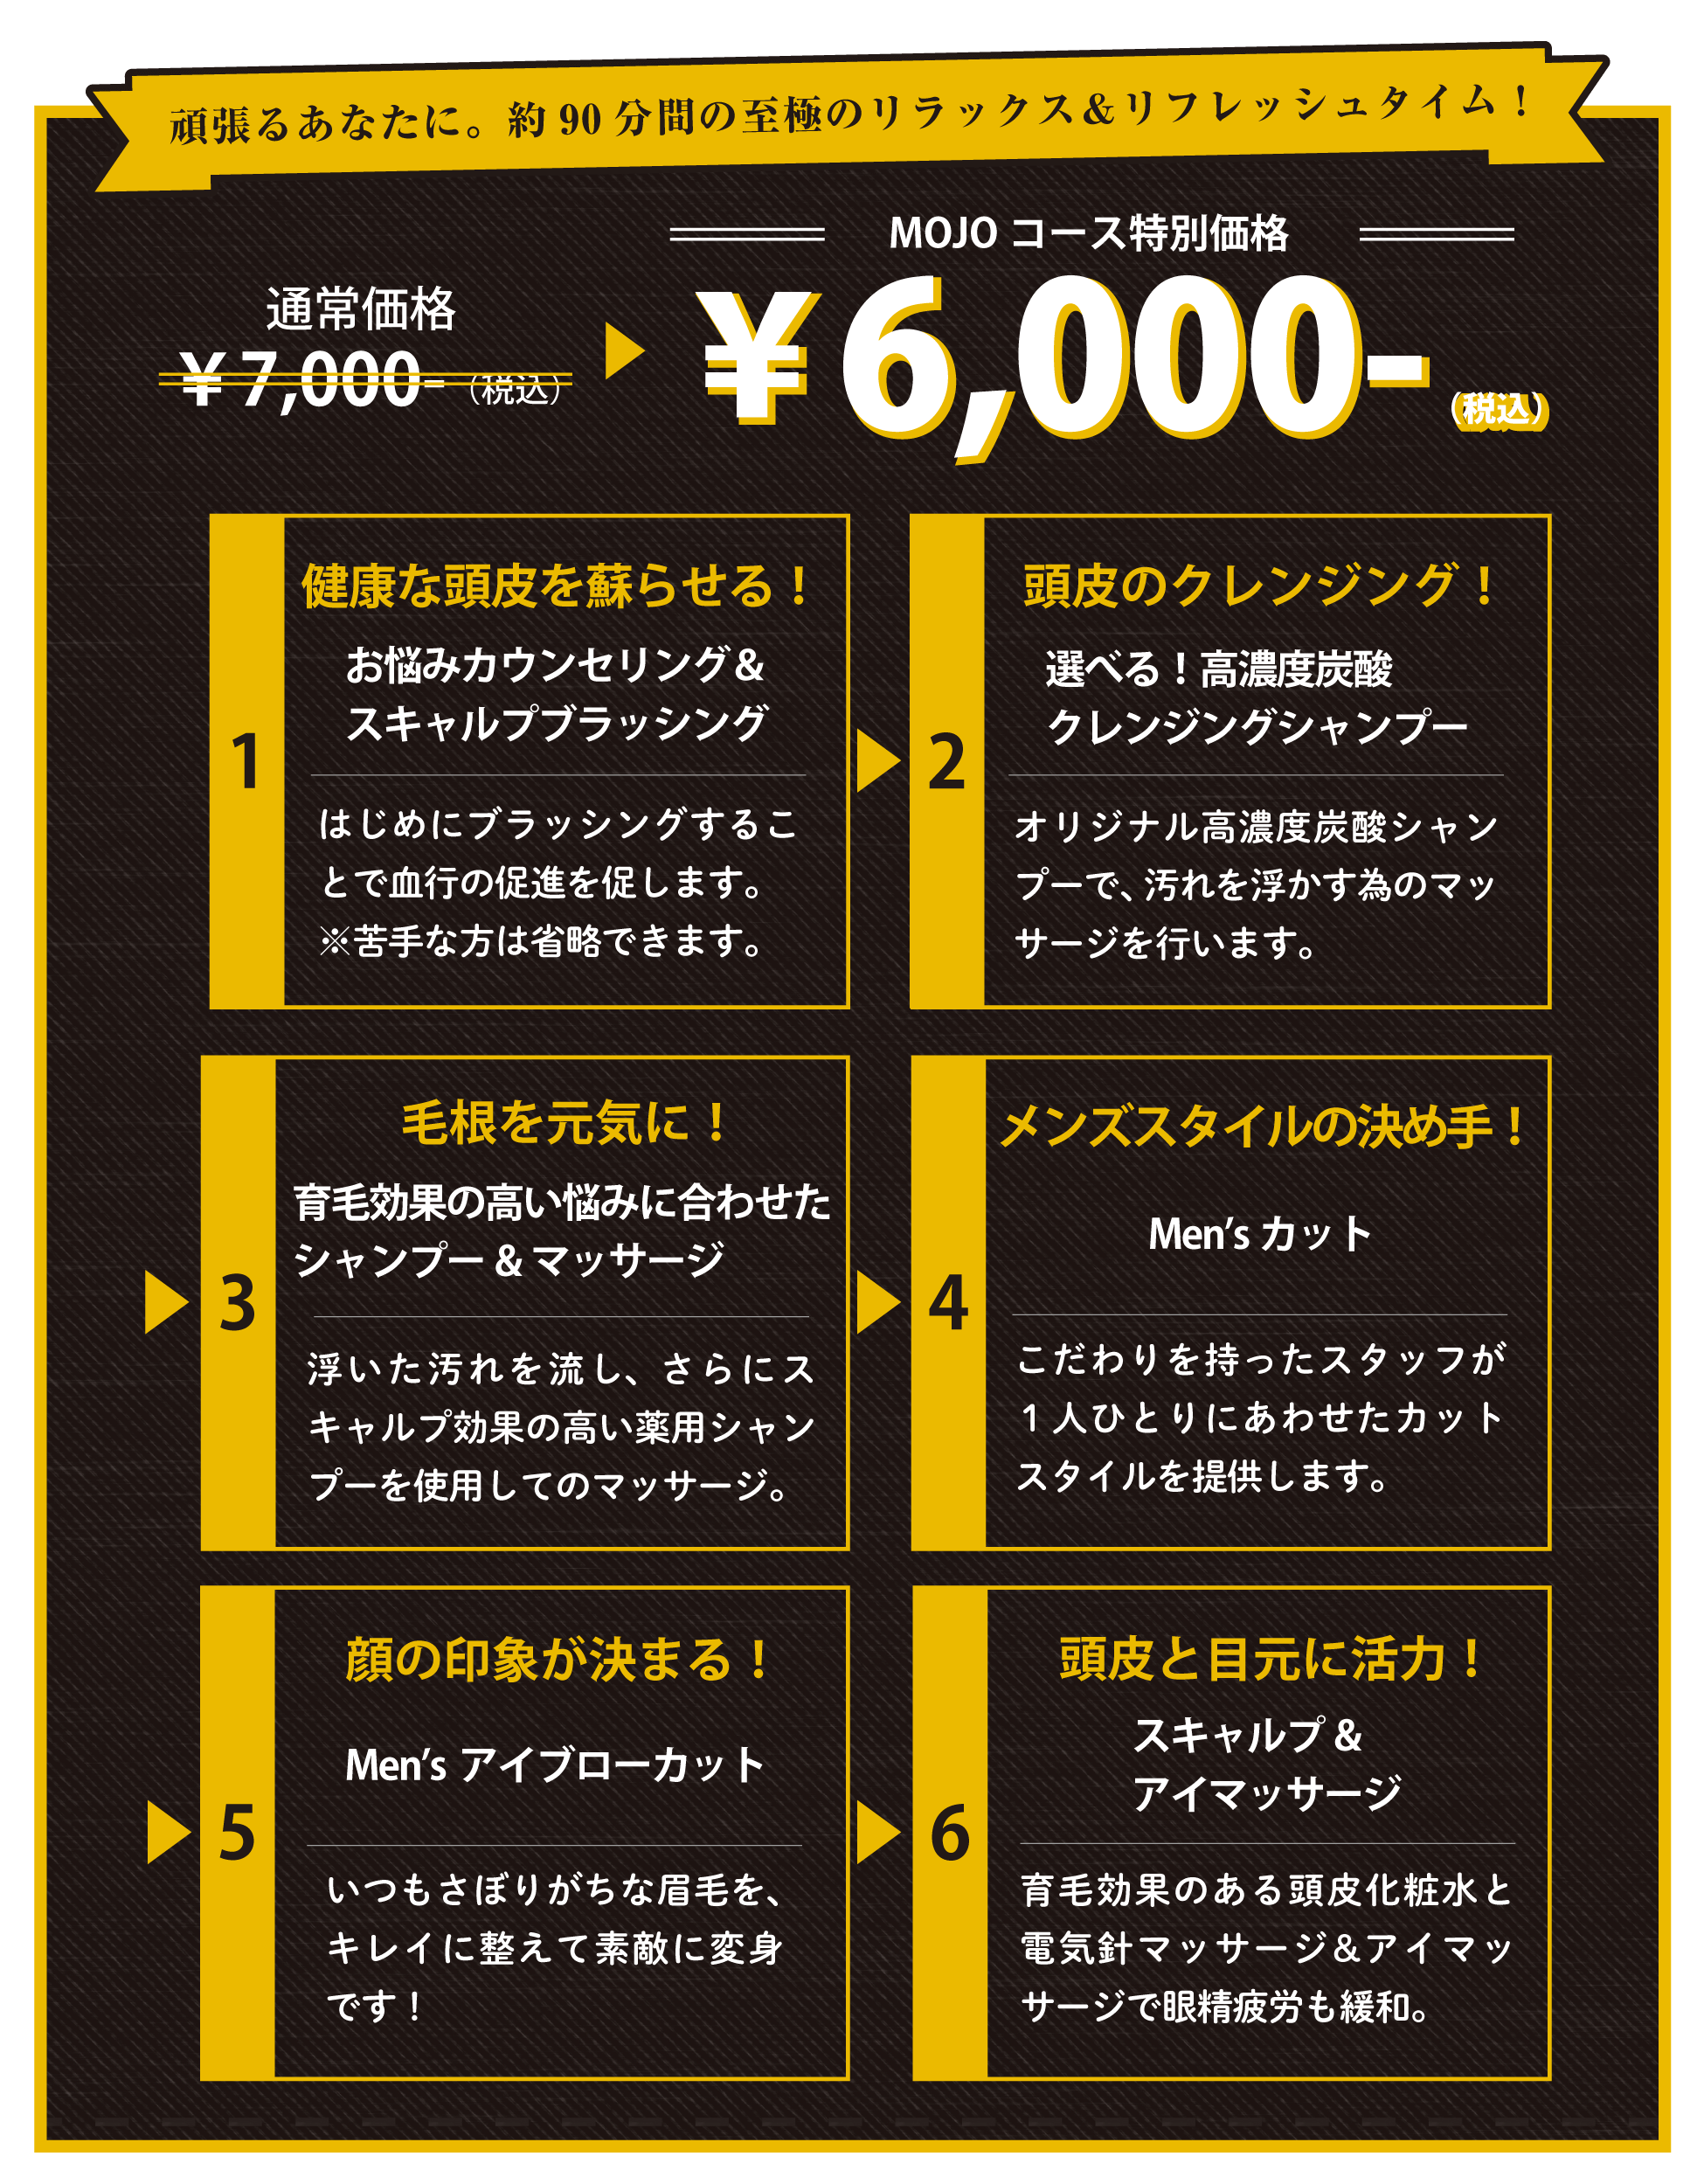 通常価格7000円（税込）→MOJOコース特別価格6000円（税込）